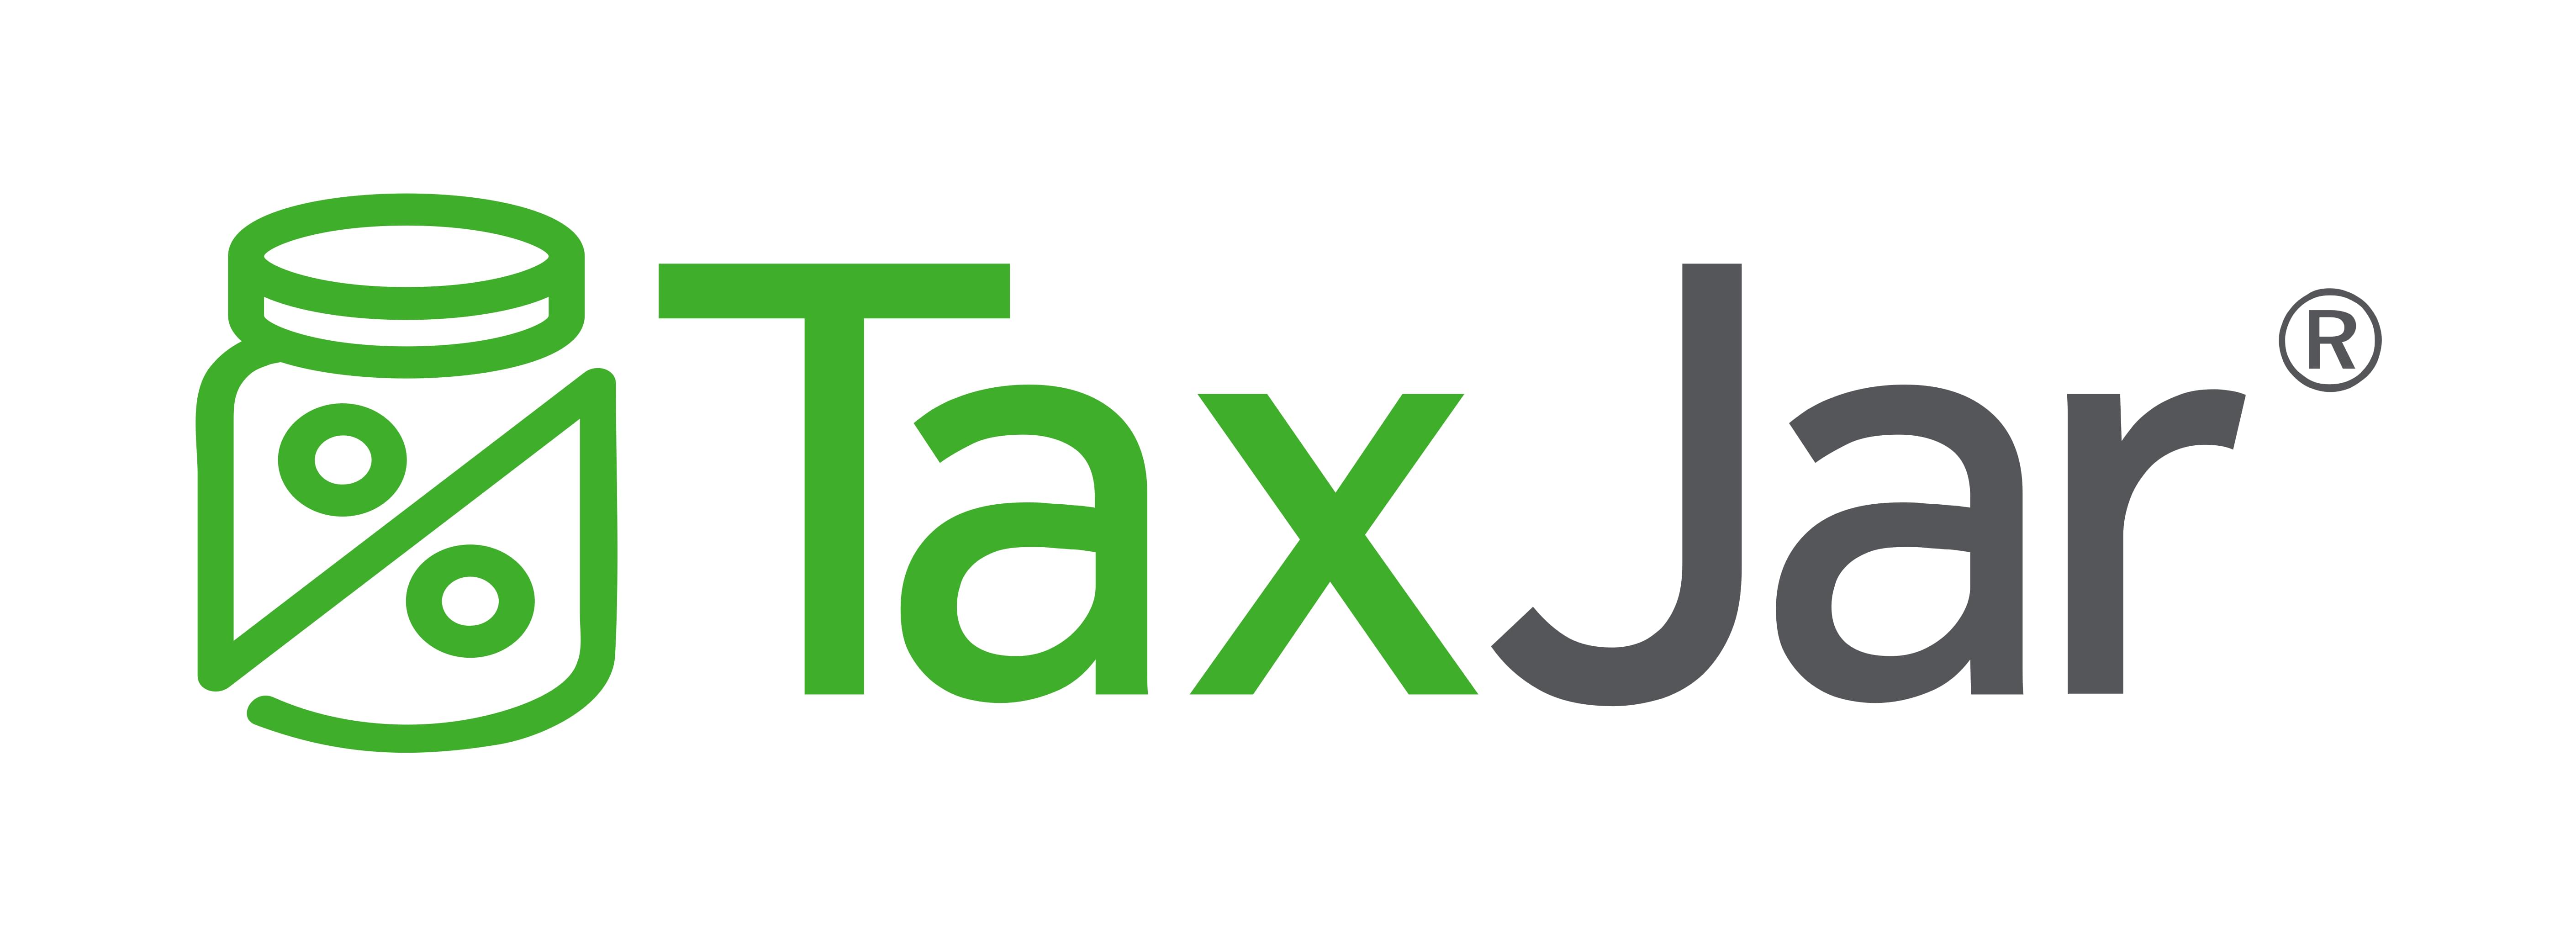 TaxJar - 2018 Amazon Software Tool Promo Code